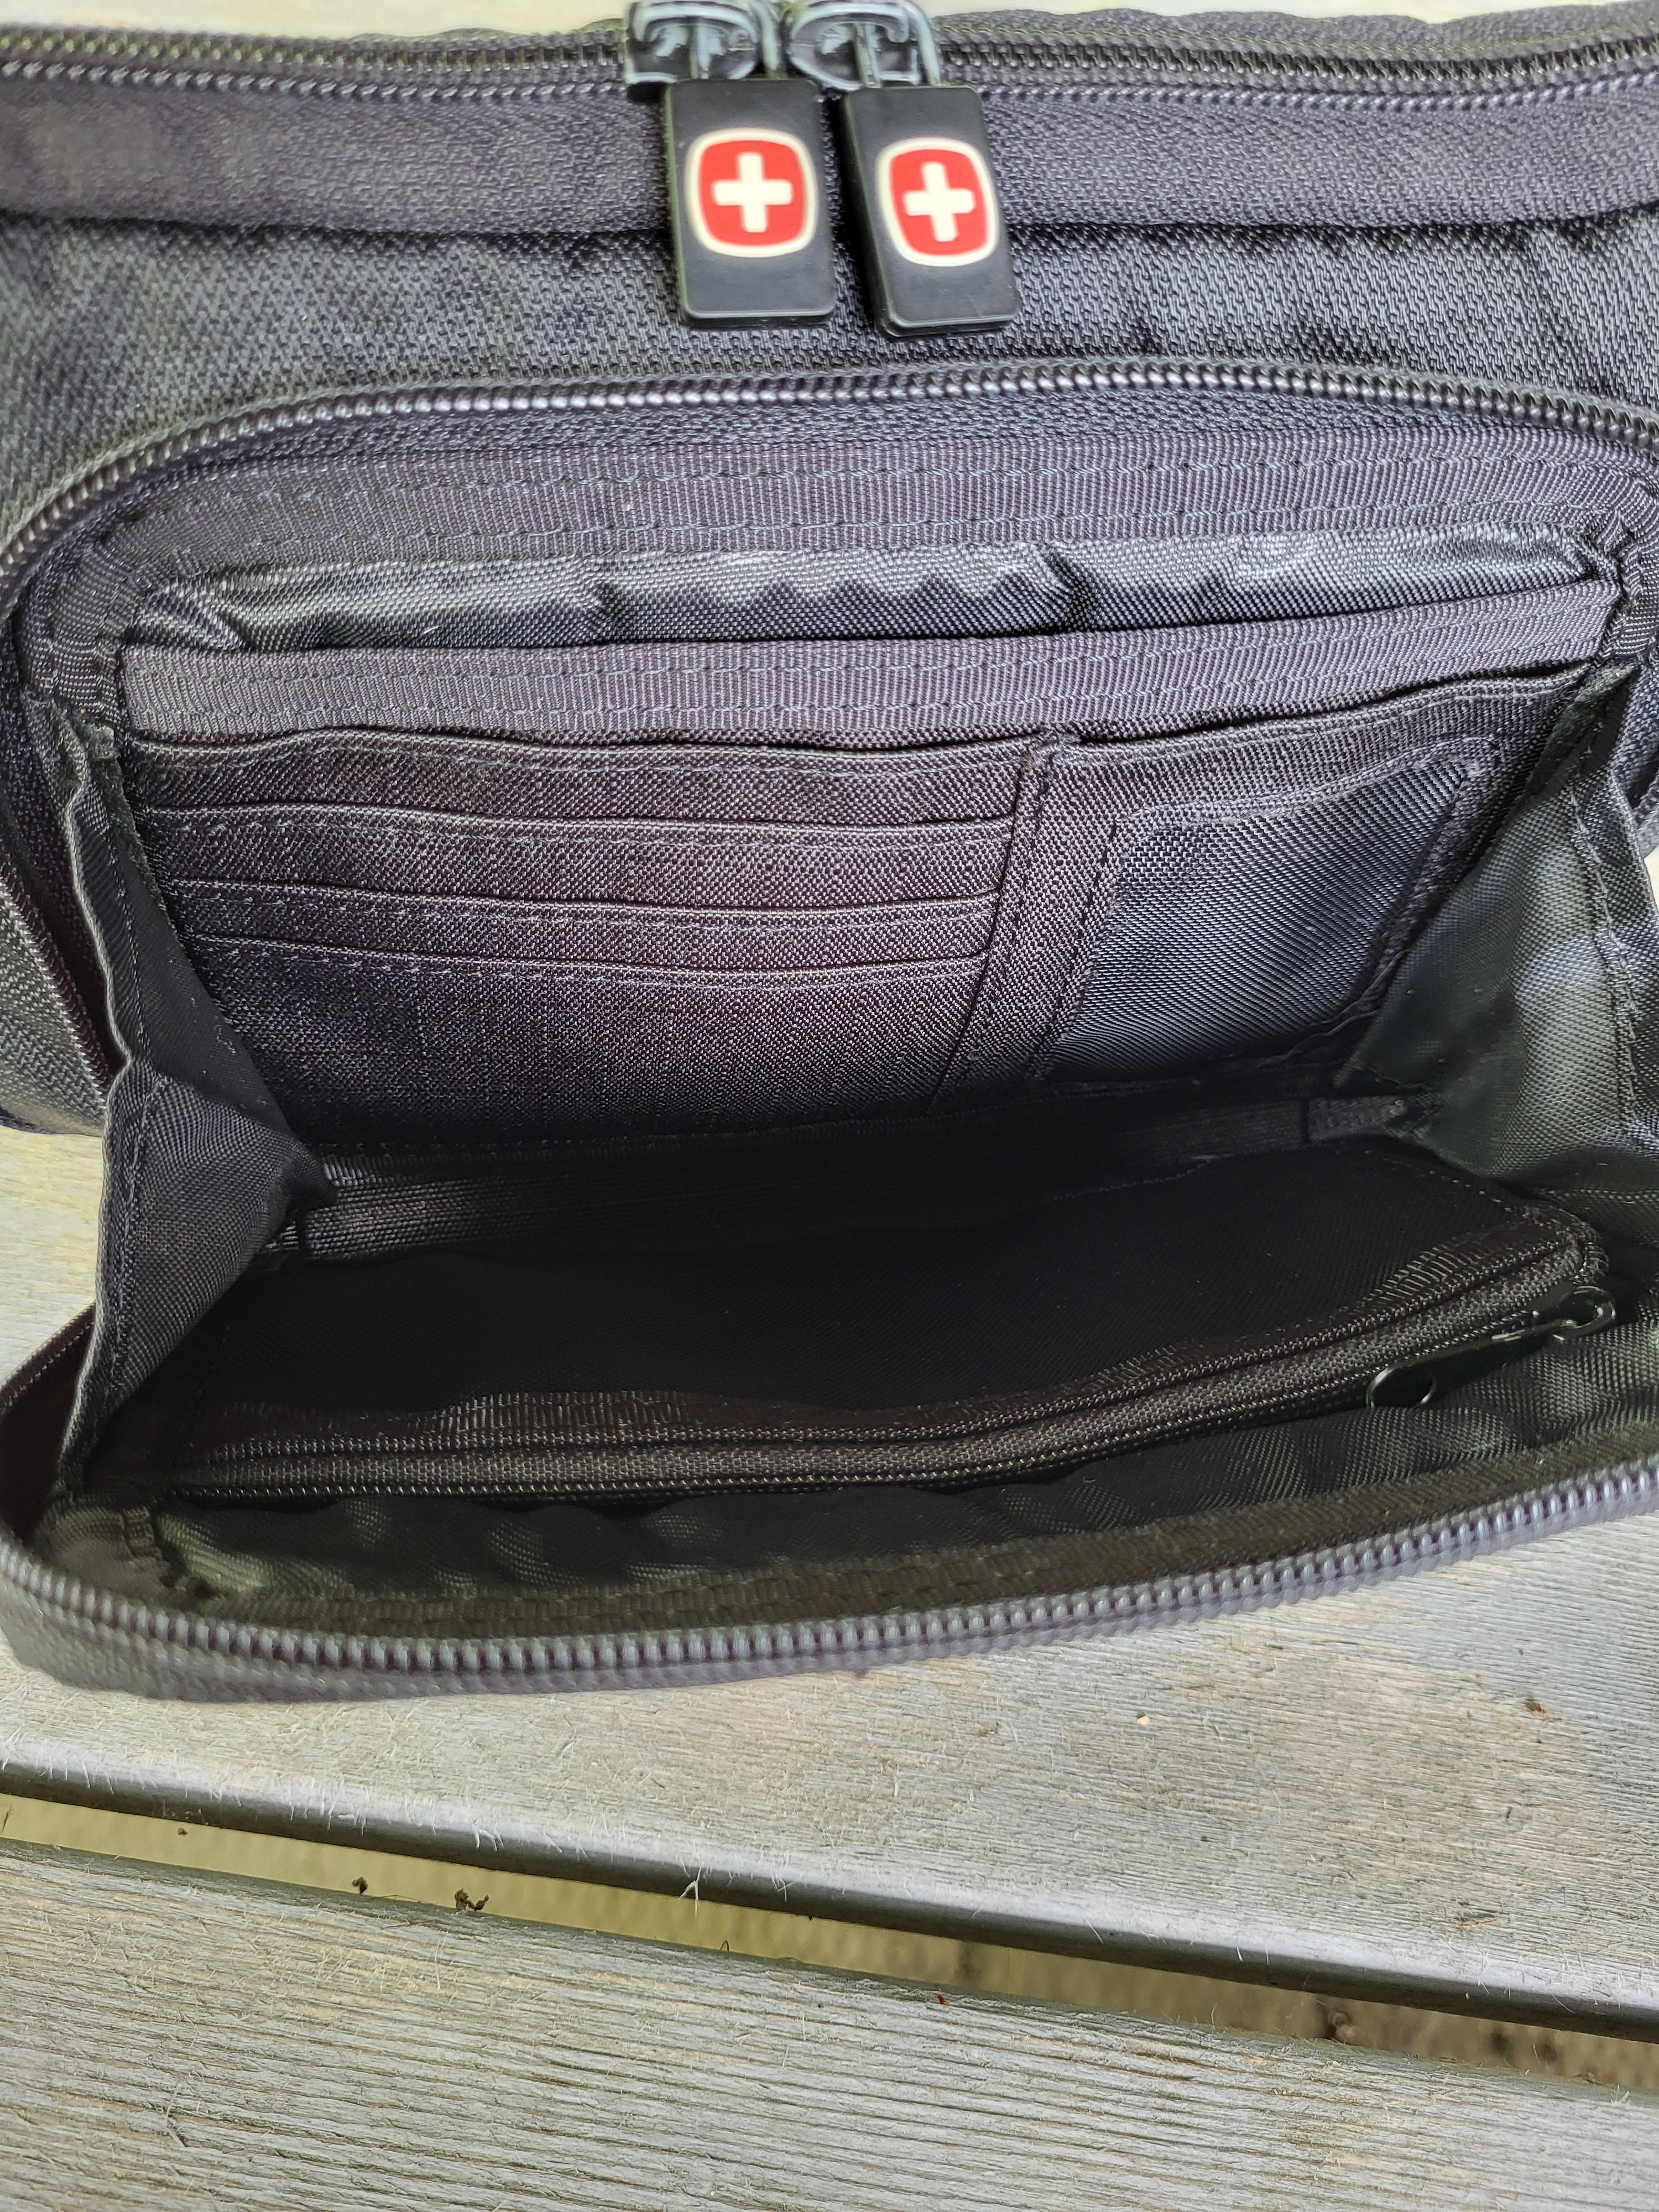 Swiss Gear Black Nylon Multi Function Bag